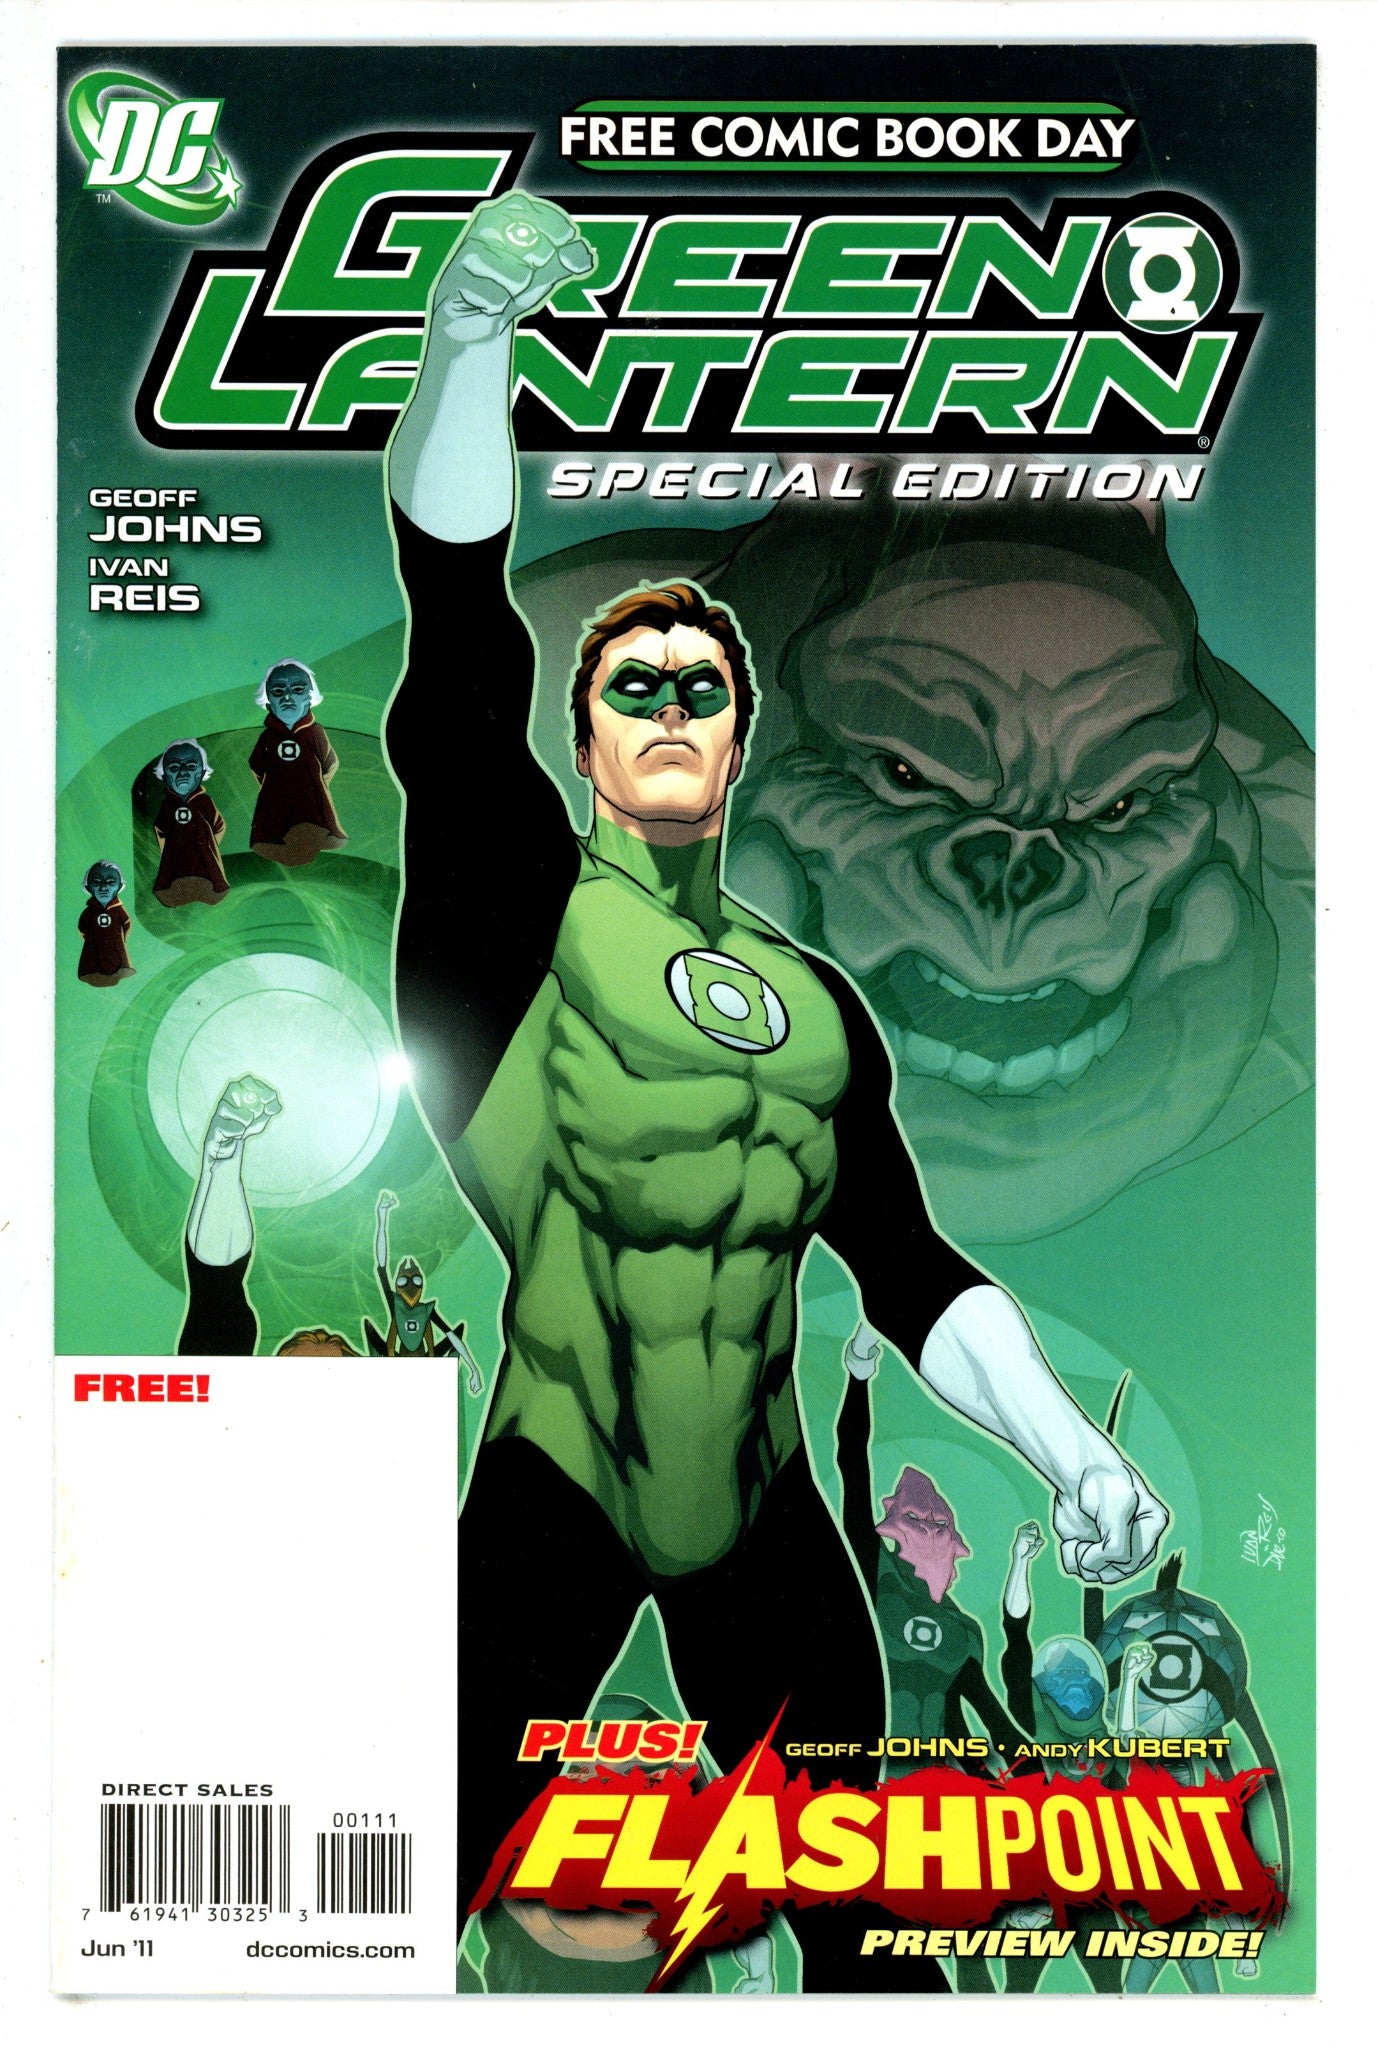 FCBD 2011 Green Lantern Flashpoint Special Edition 1 (2011)